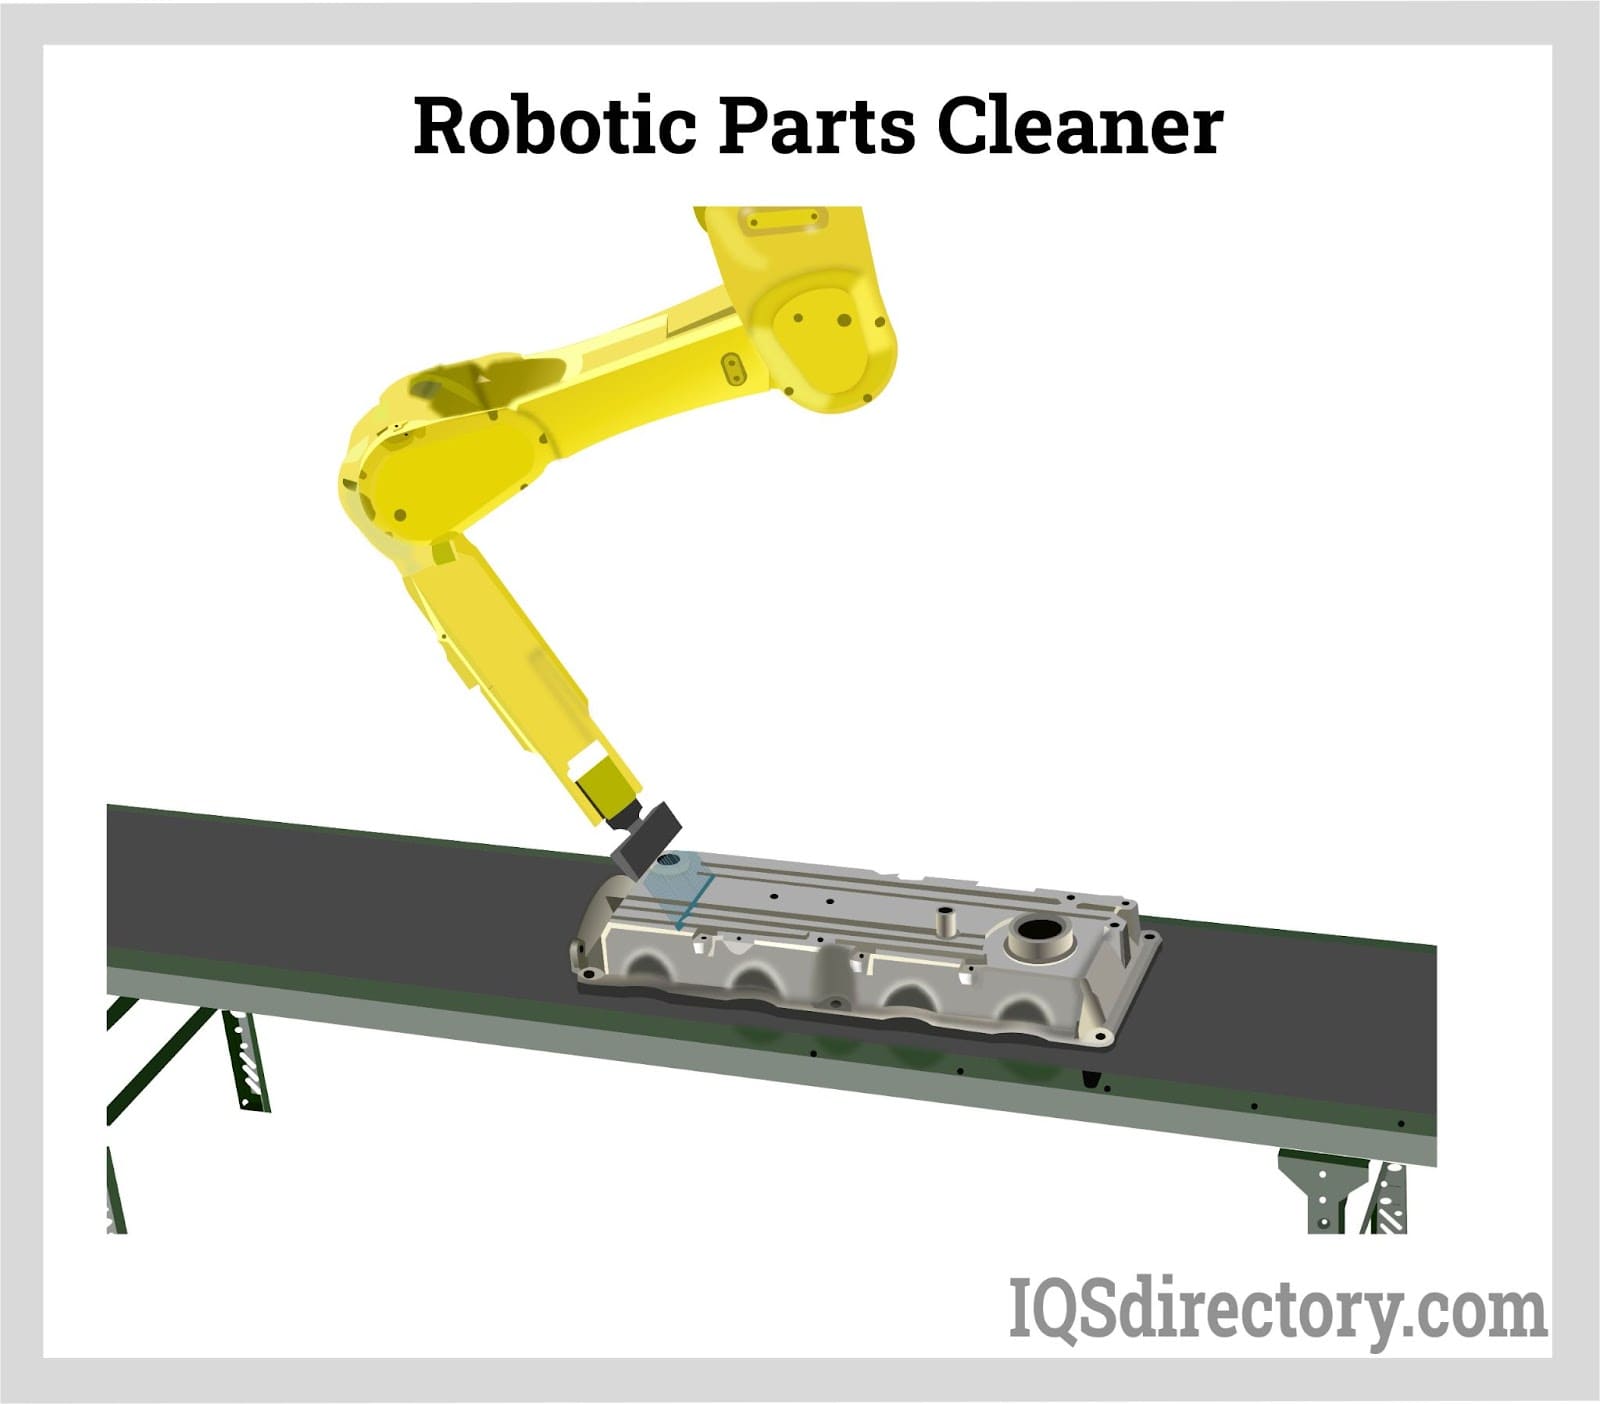 Robotic Parts Cleaner